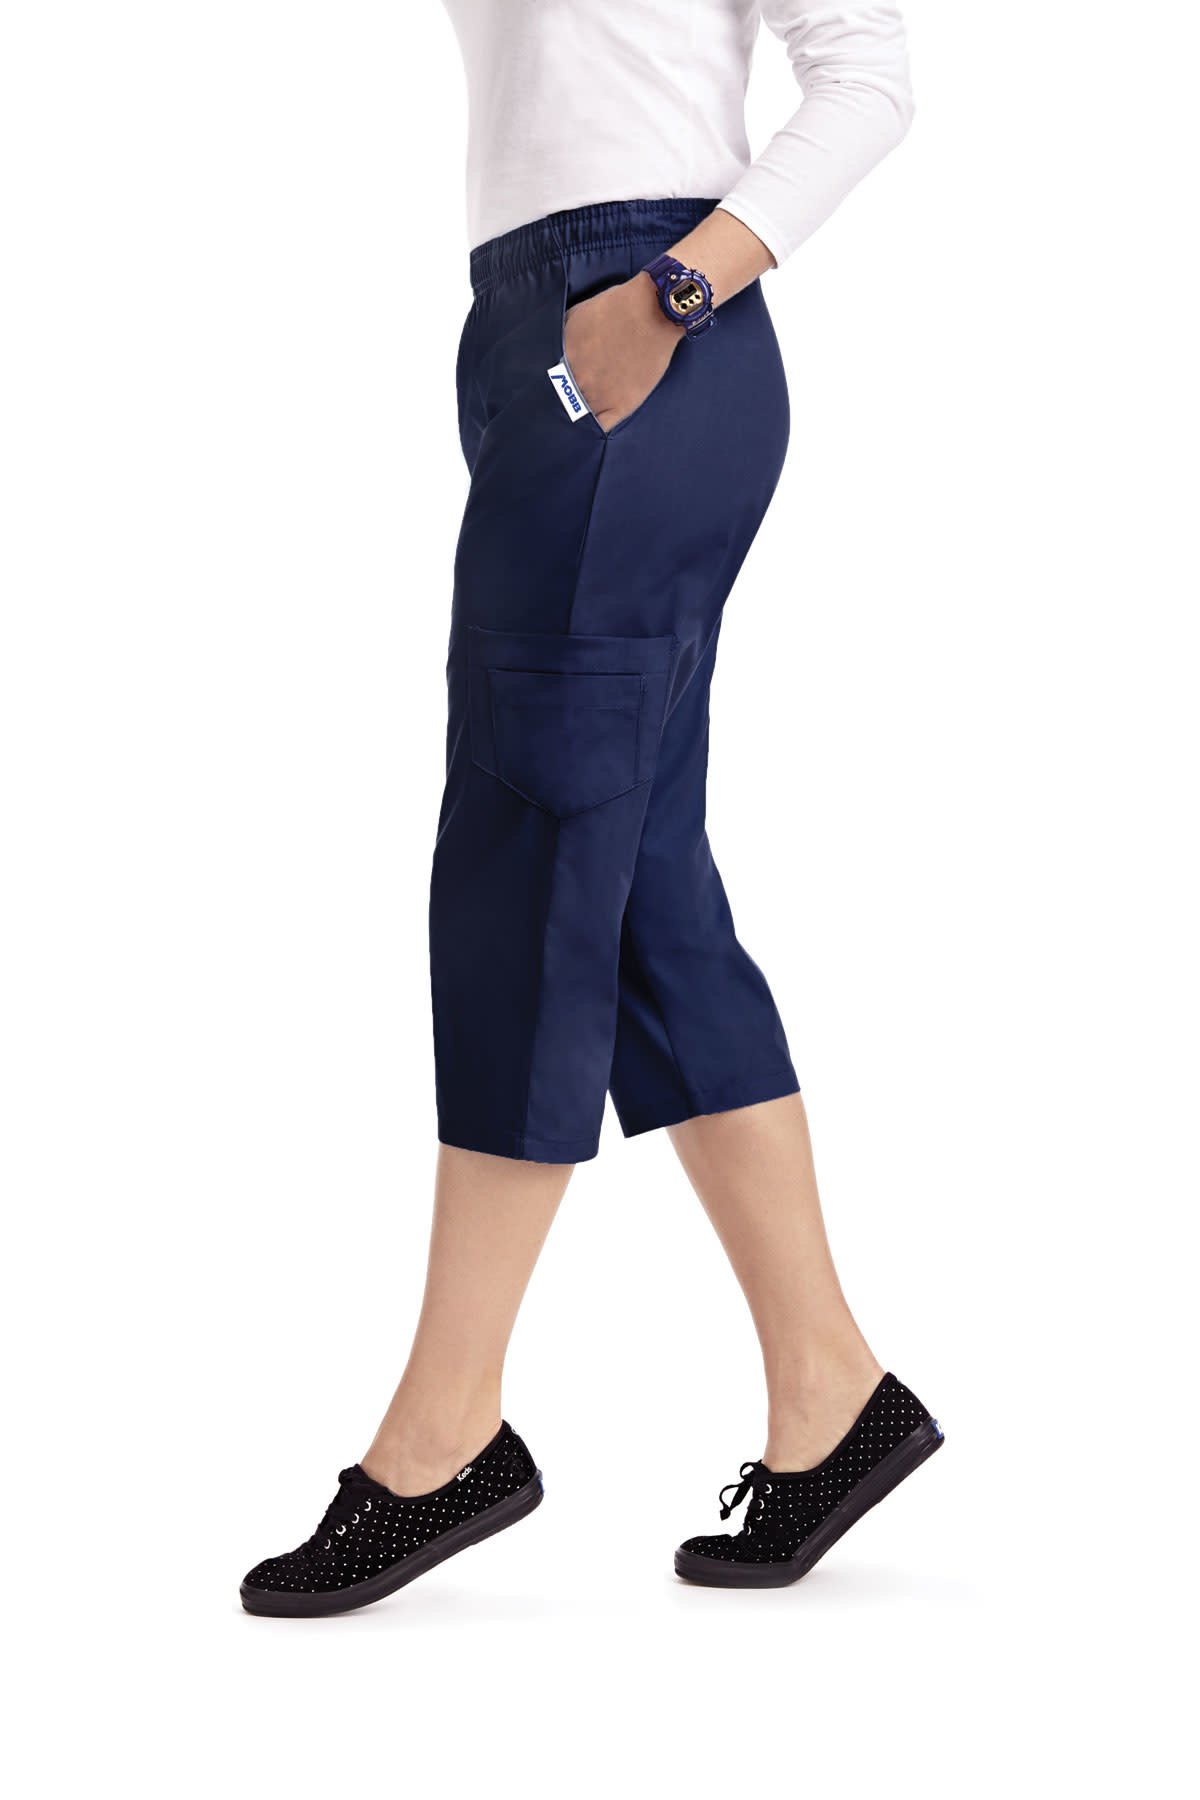 MOBB Navy Blue Women's Capri Pants 314P